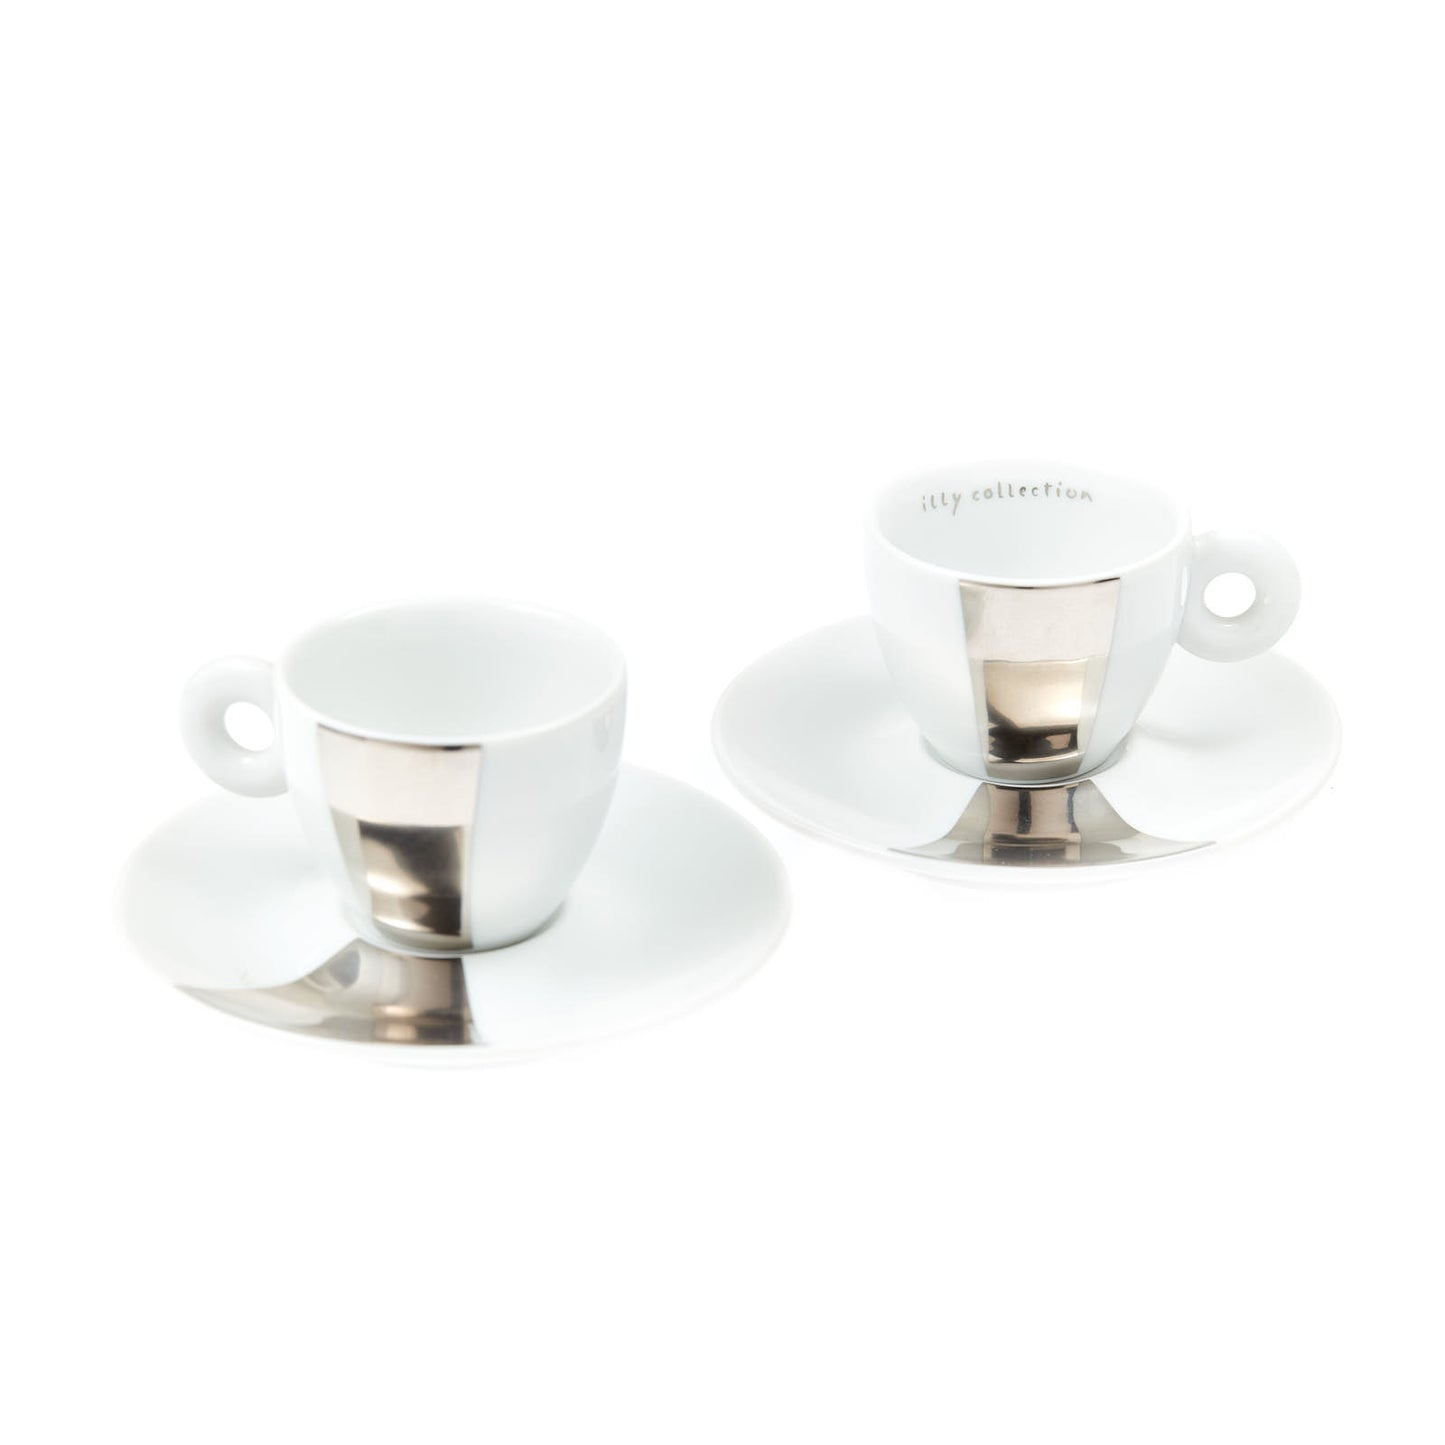 Set 2 coffee cups with mirror segment (designed by Michelangelo Pistoletto) mod. B